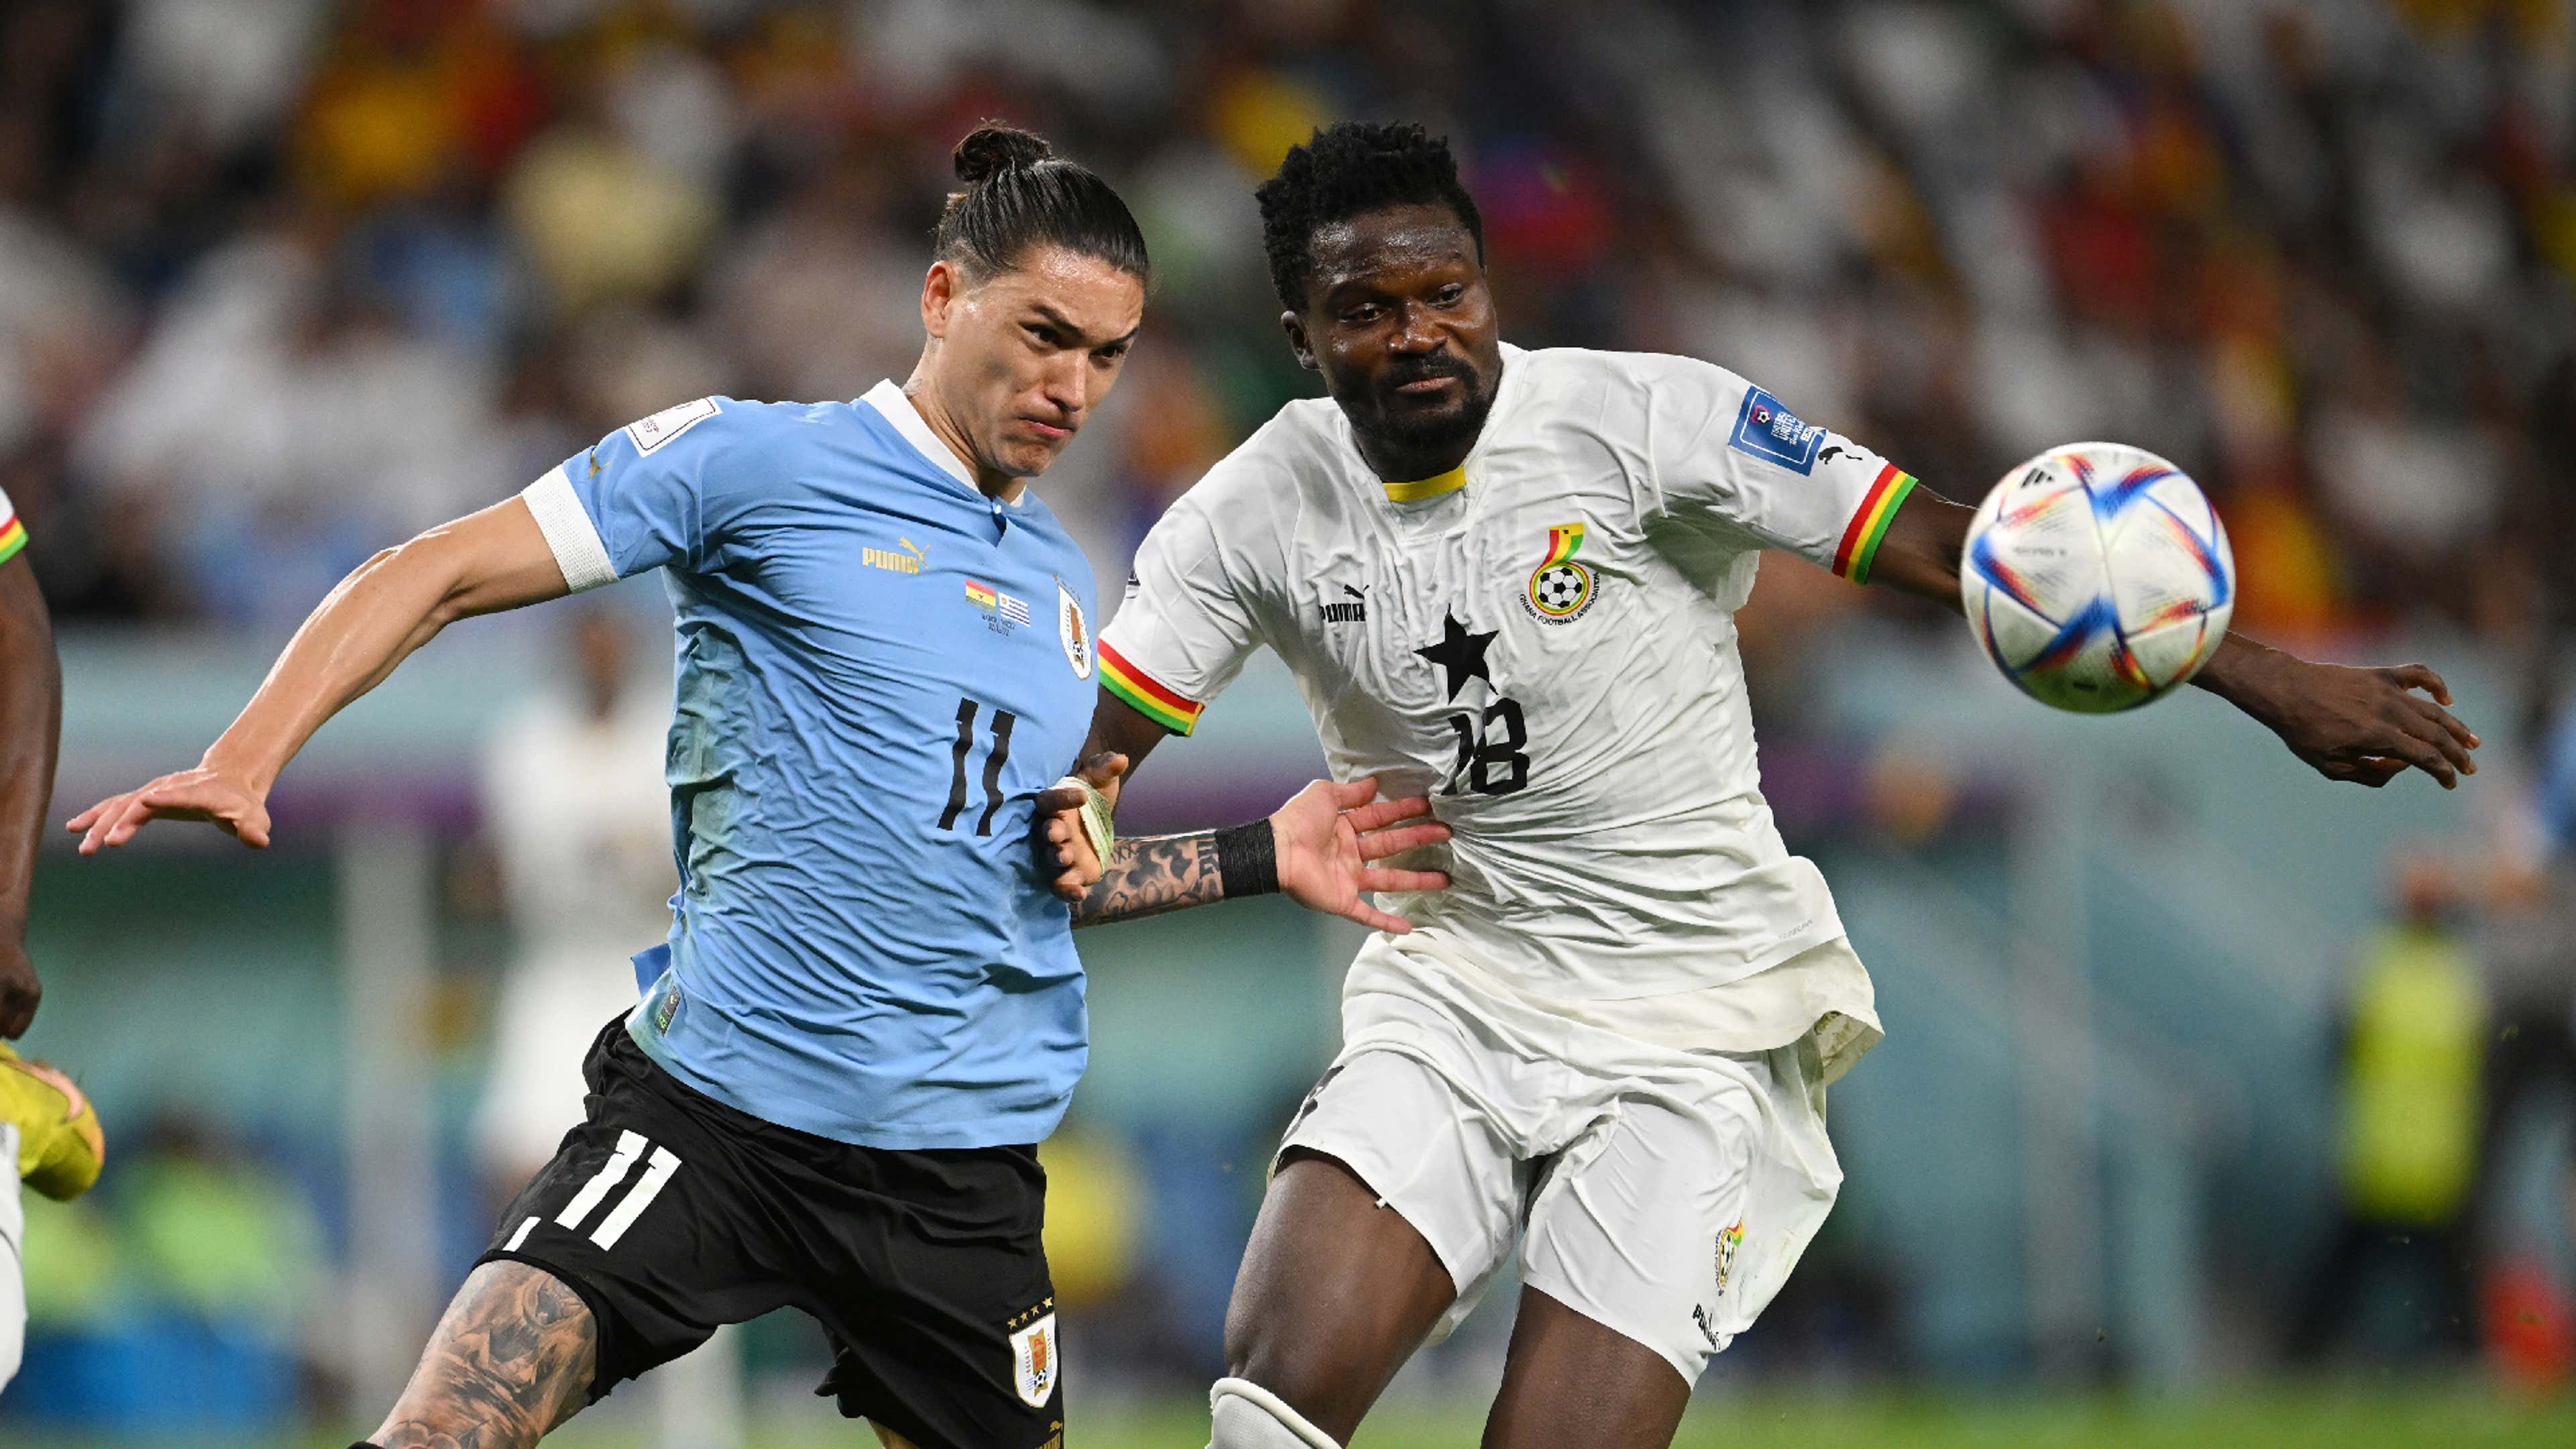 Ghana 0 - 2 Uruguay, el Mundial de Qatar 2022